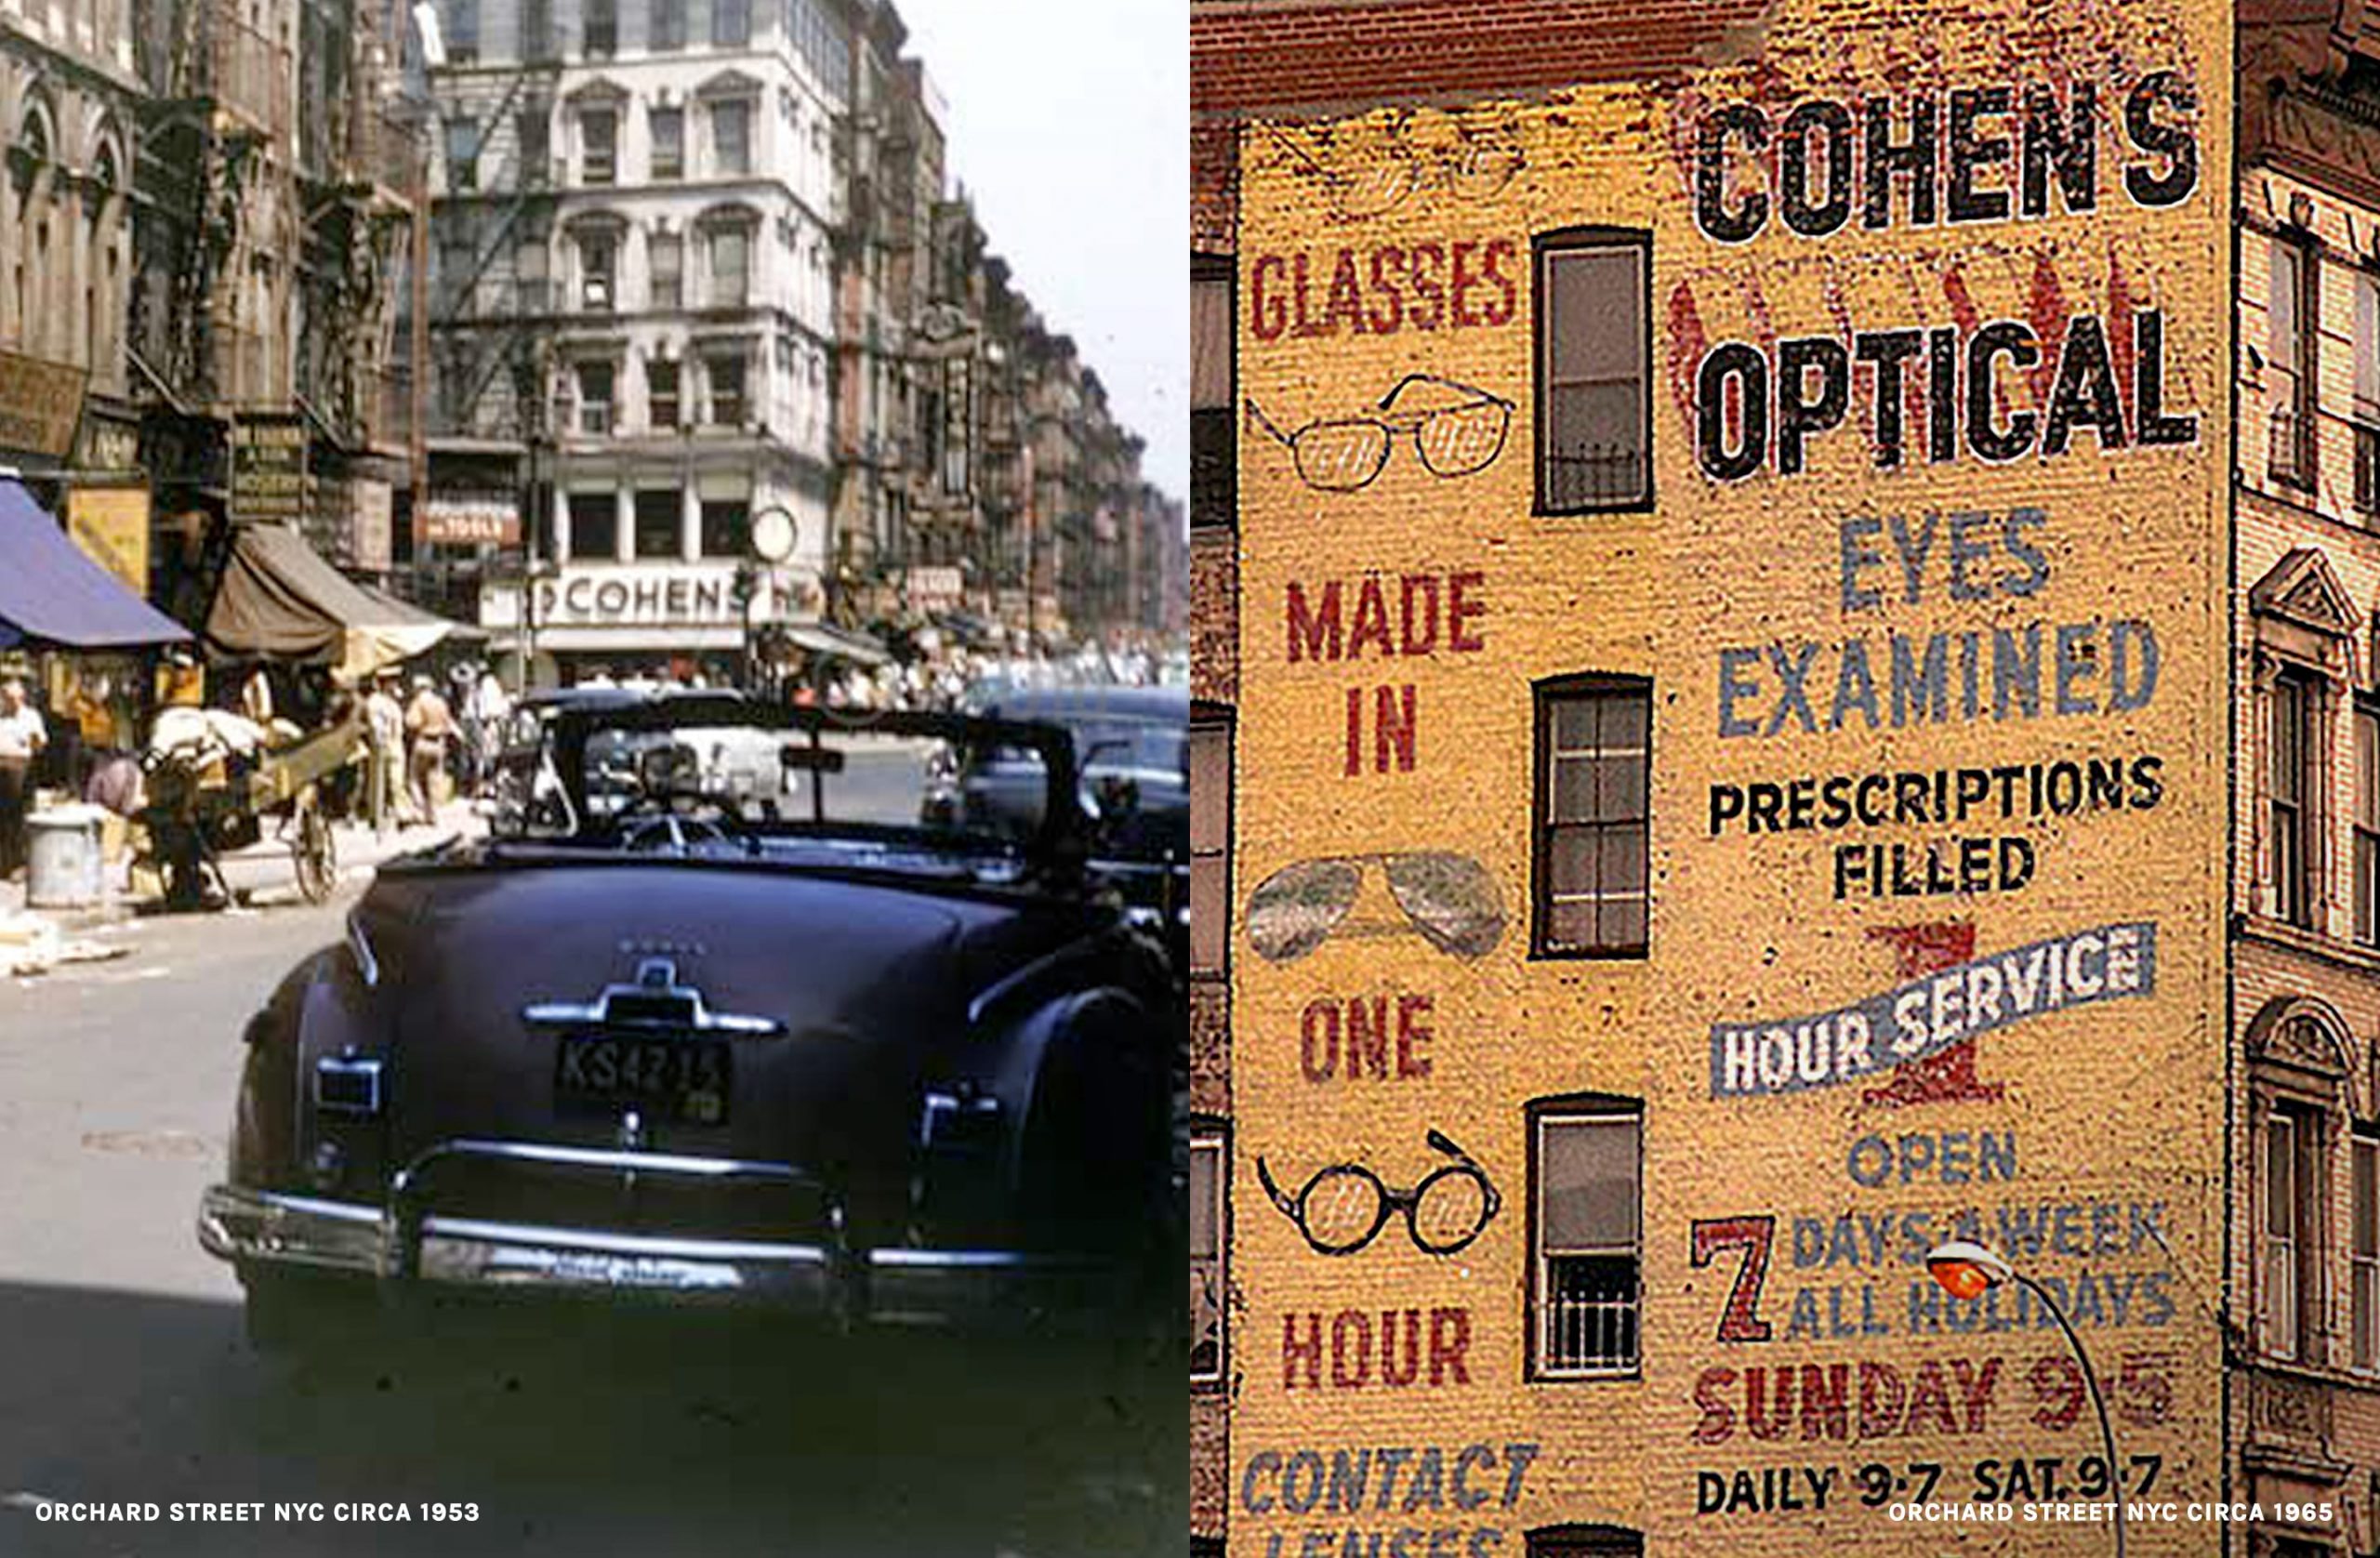 Cohen's Fashion Optical on Orchard Street, NYC, circa 1965